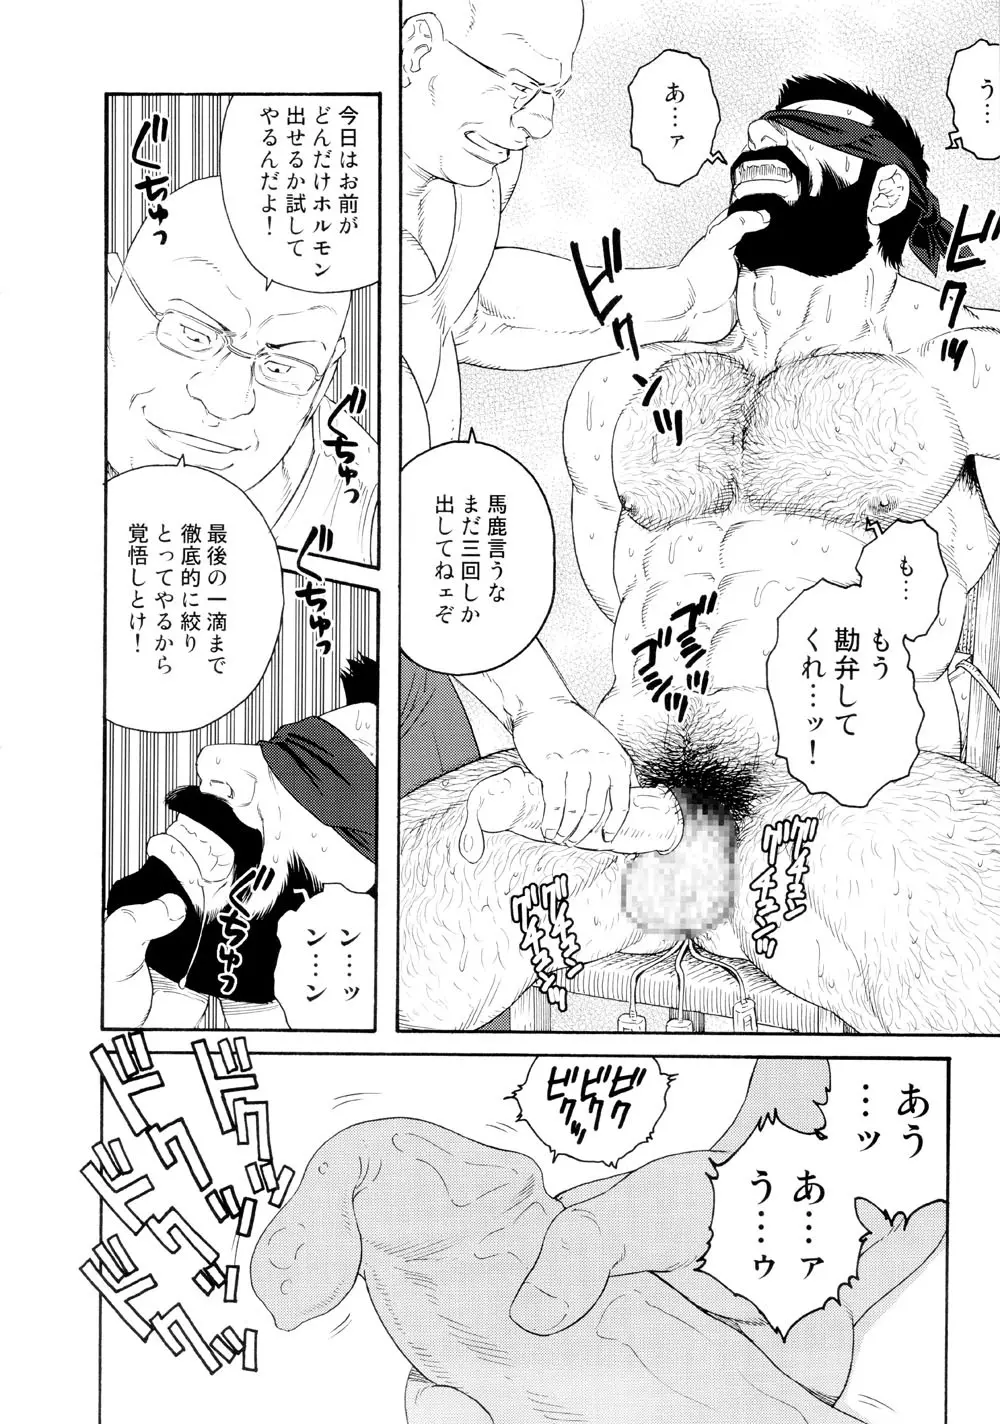 Genryu Chapter 3 14ページ